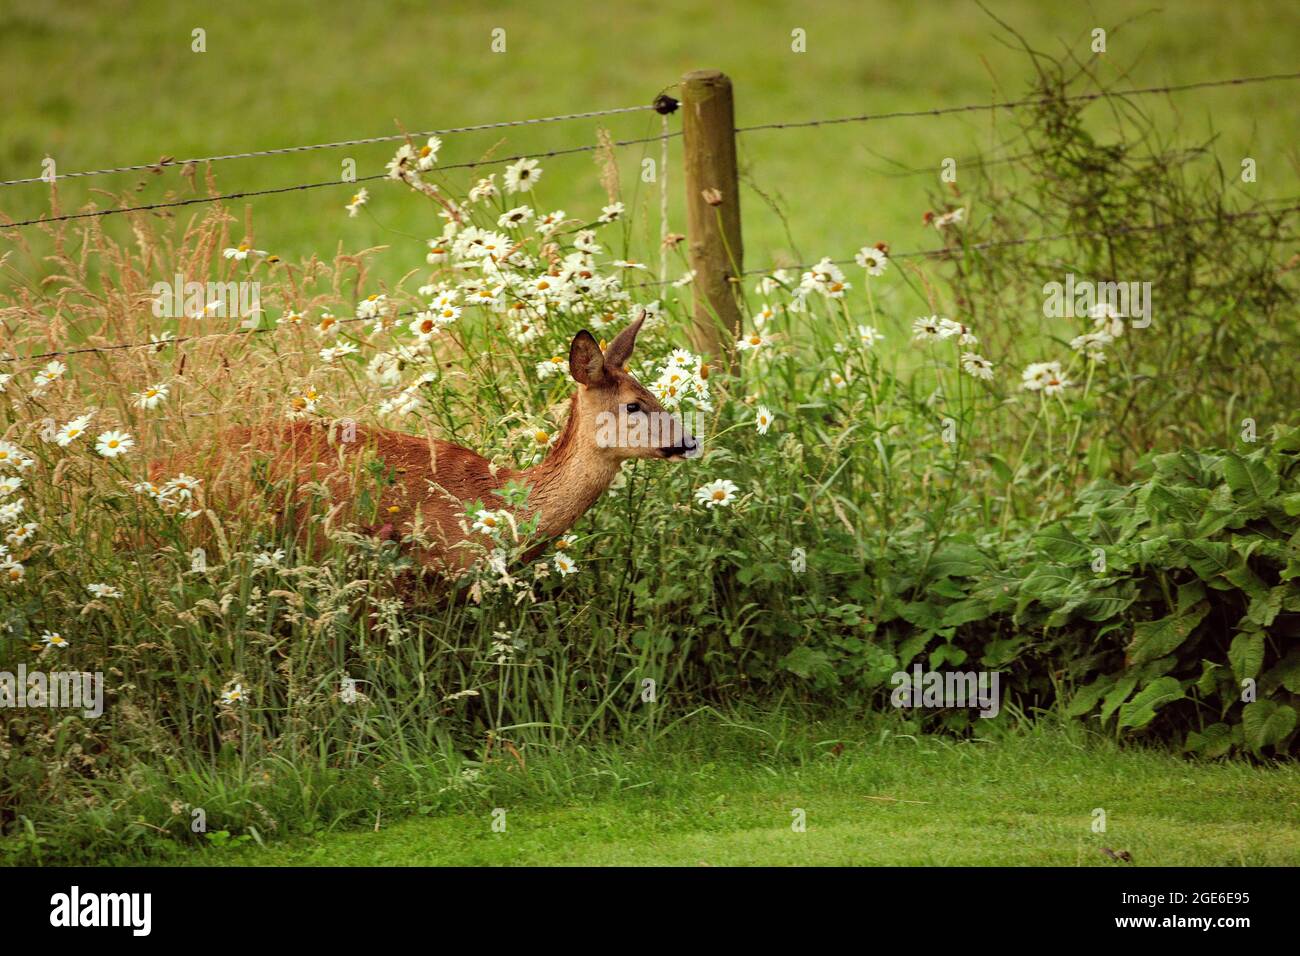 Paesi Bassi, Õs-Graveland, tenuta rurale Hilverbeek. Capriolo, femmina, che entra in giardino. Foto Stock